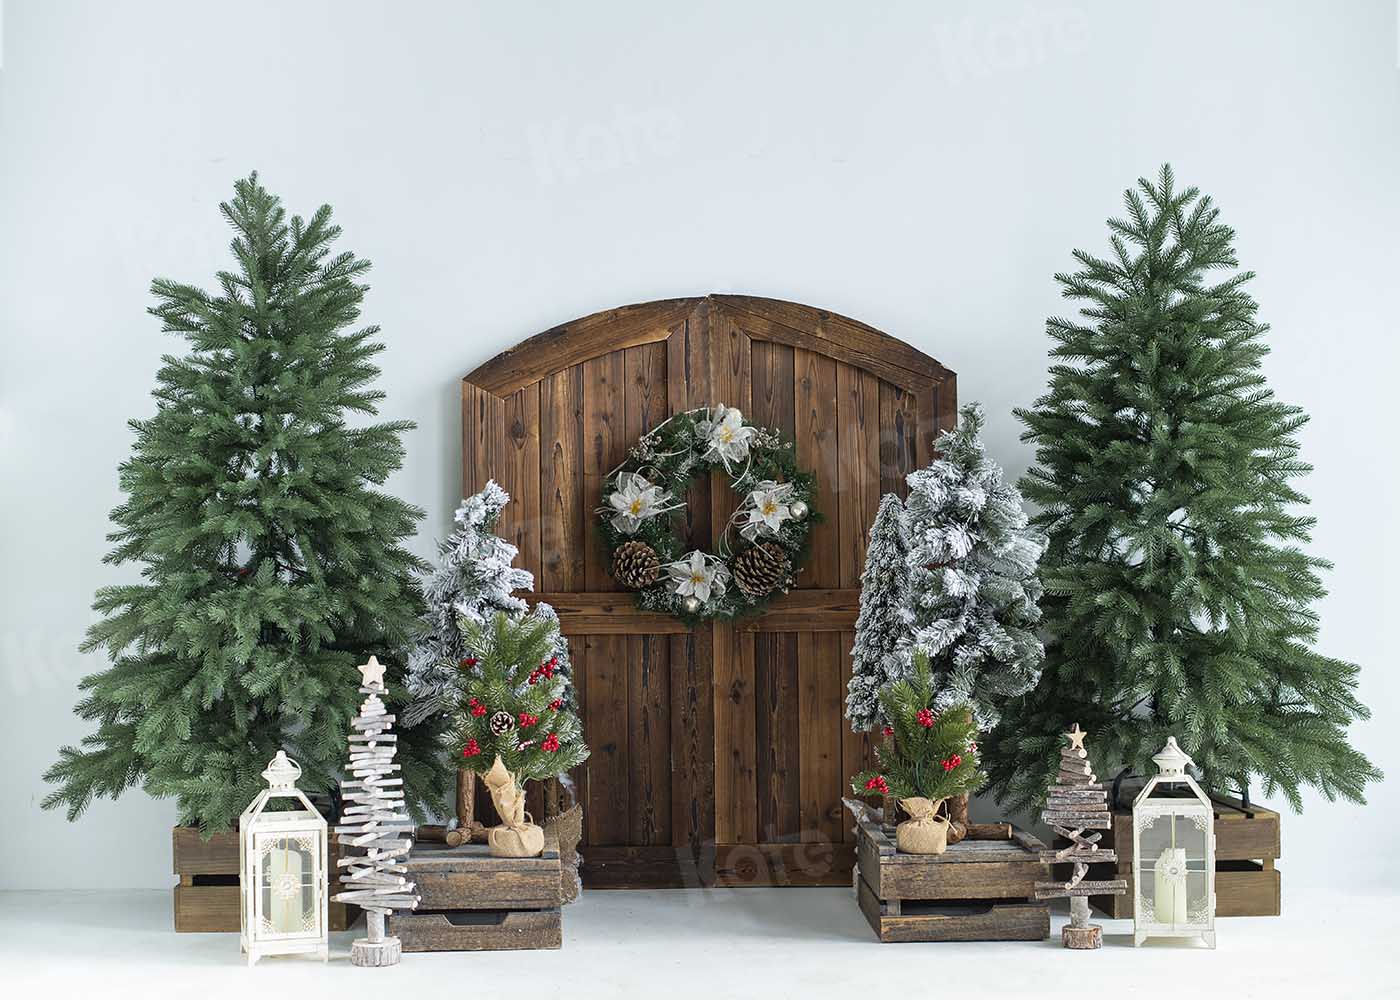 Kate Christmas Trees Barn Door Backdrop Designed by Emetselch